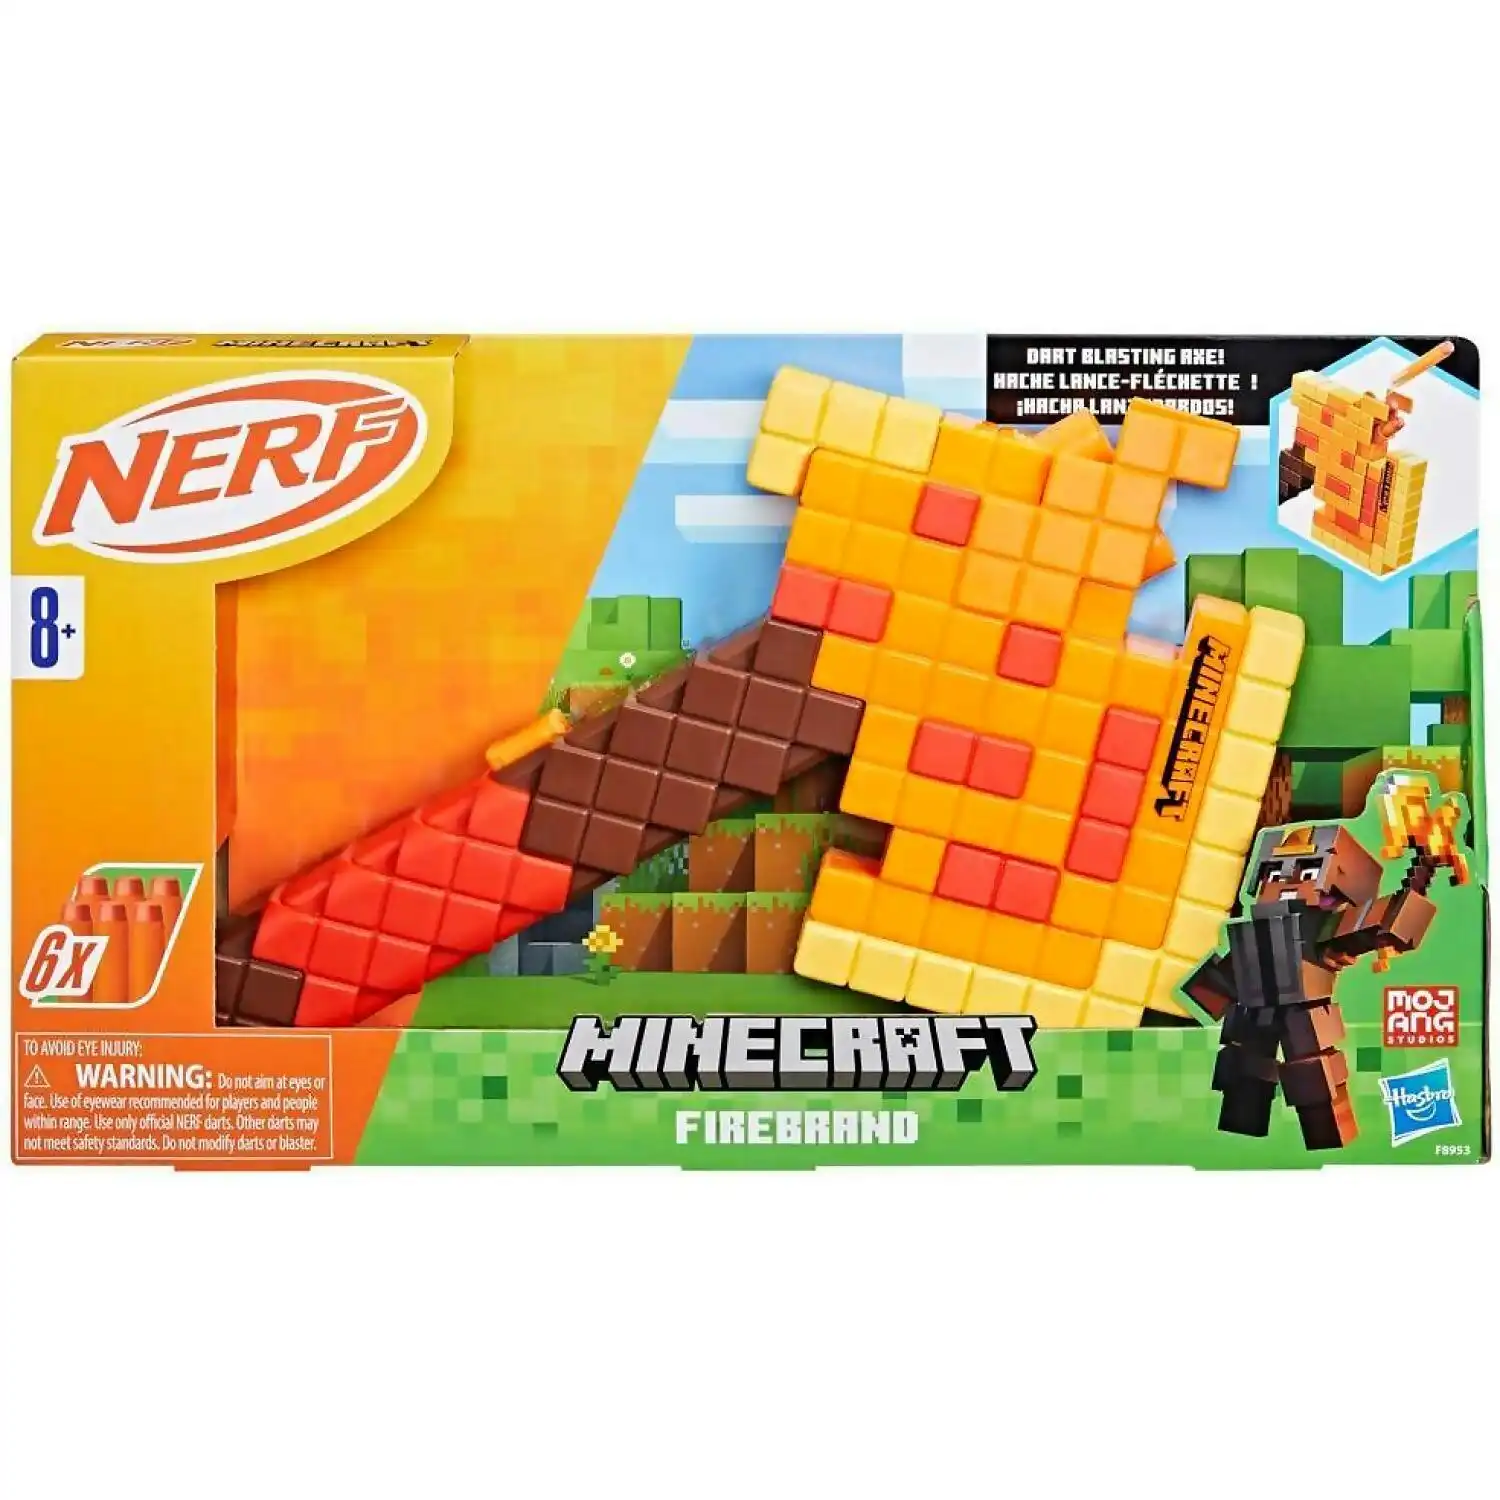 Nerf - Minecraft Firebrand Dart Blasting Axe 6 Nerf Elite Foam Darts